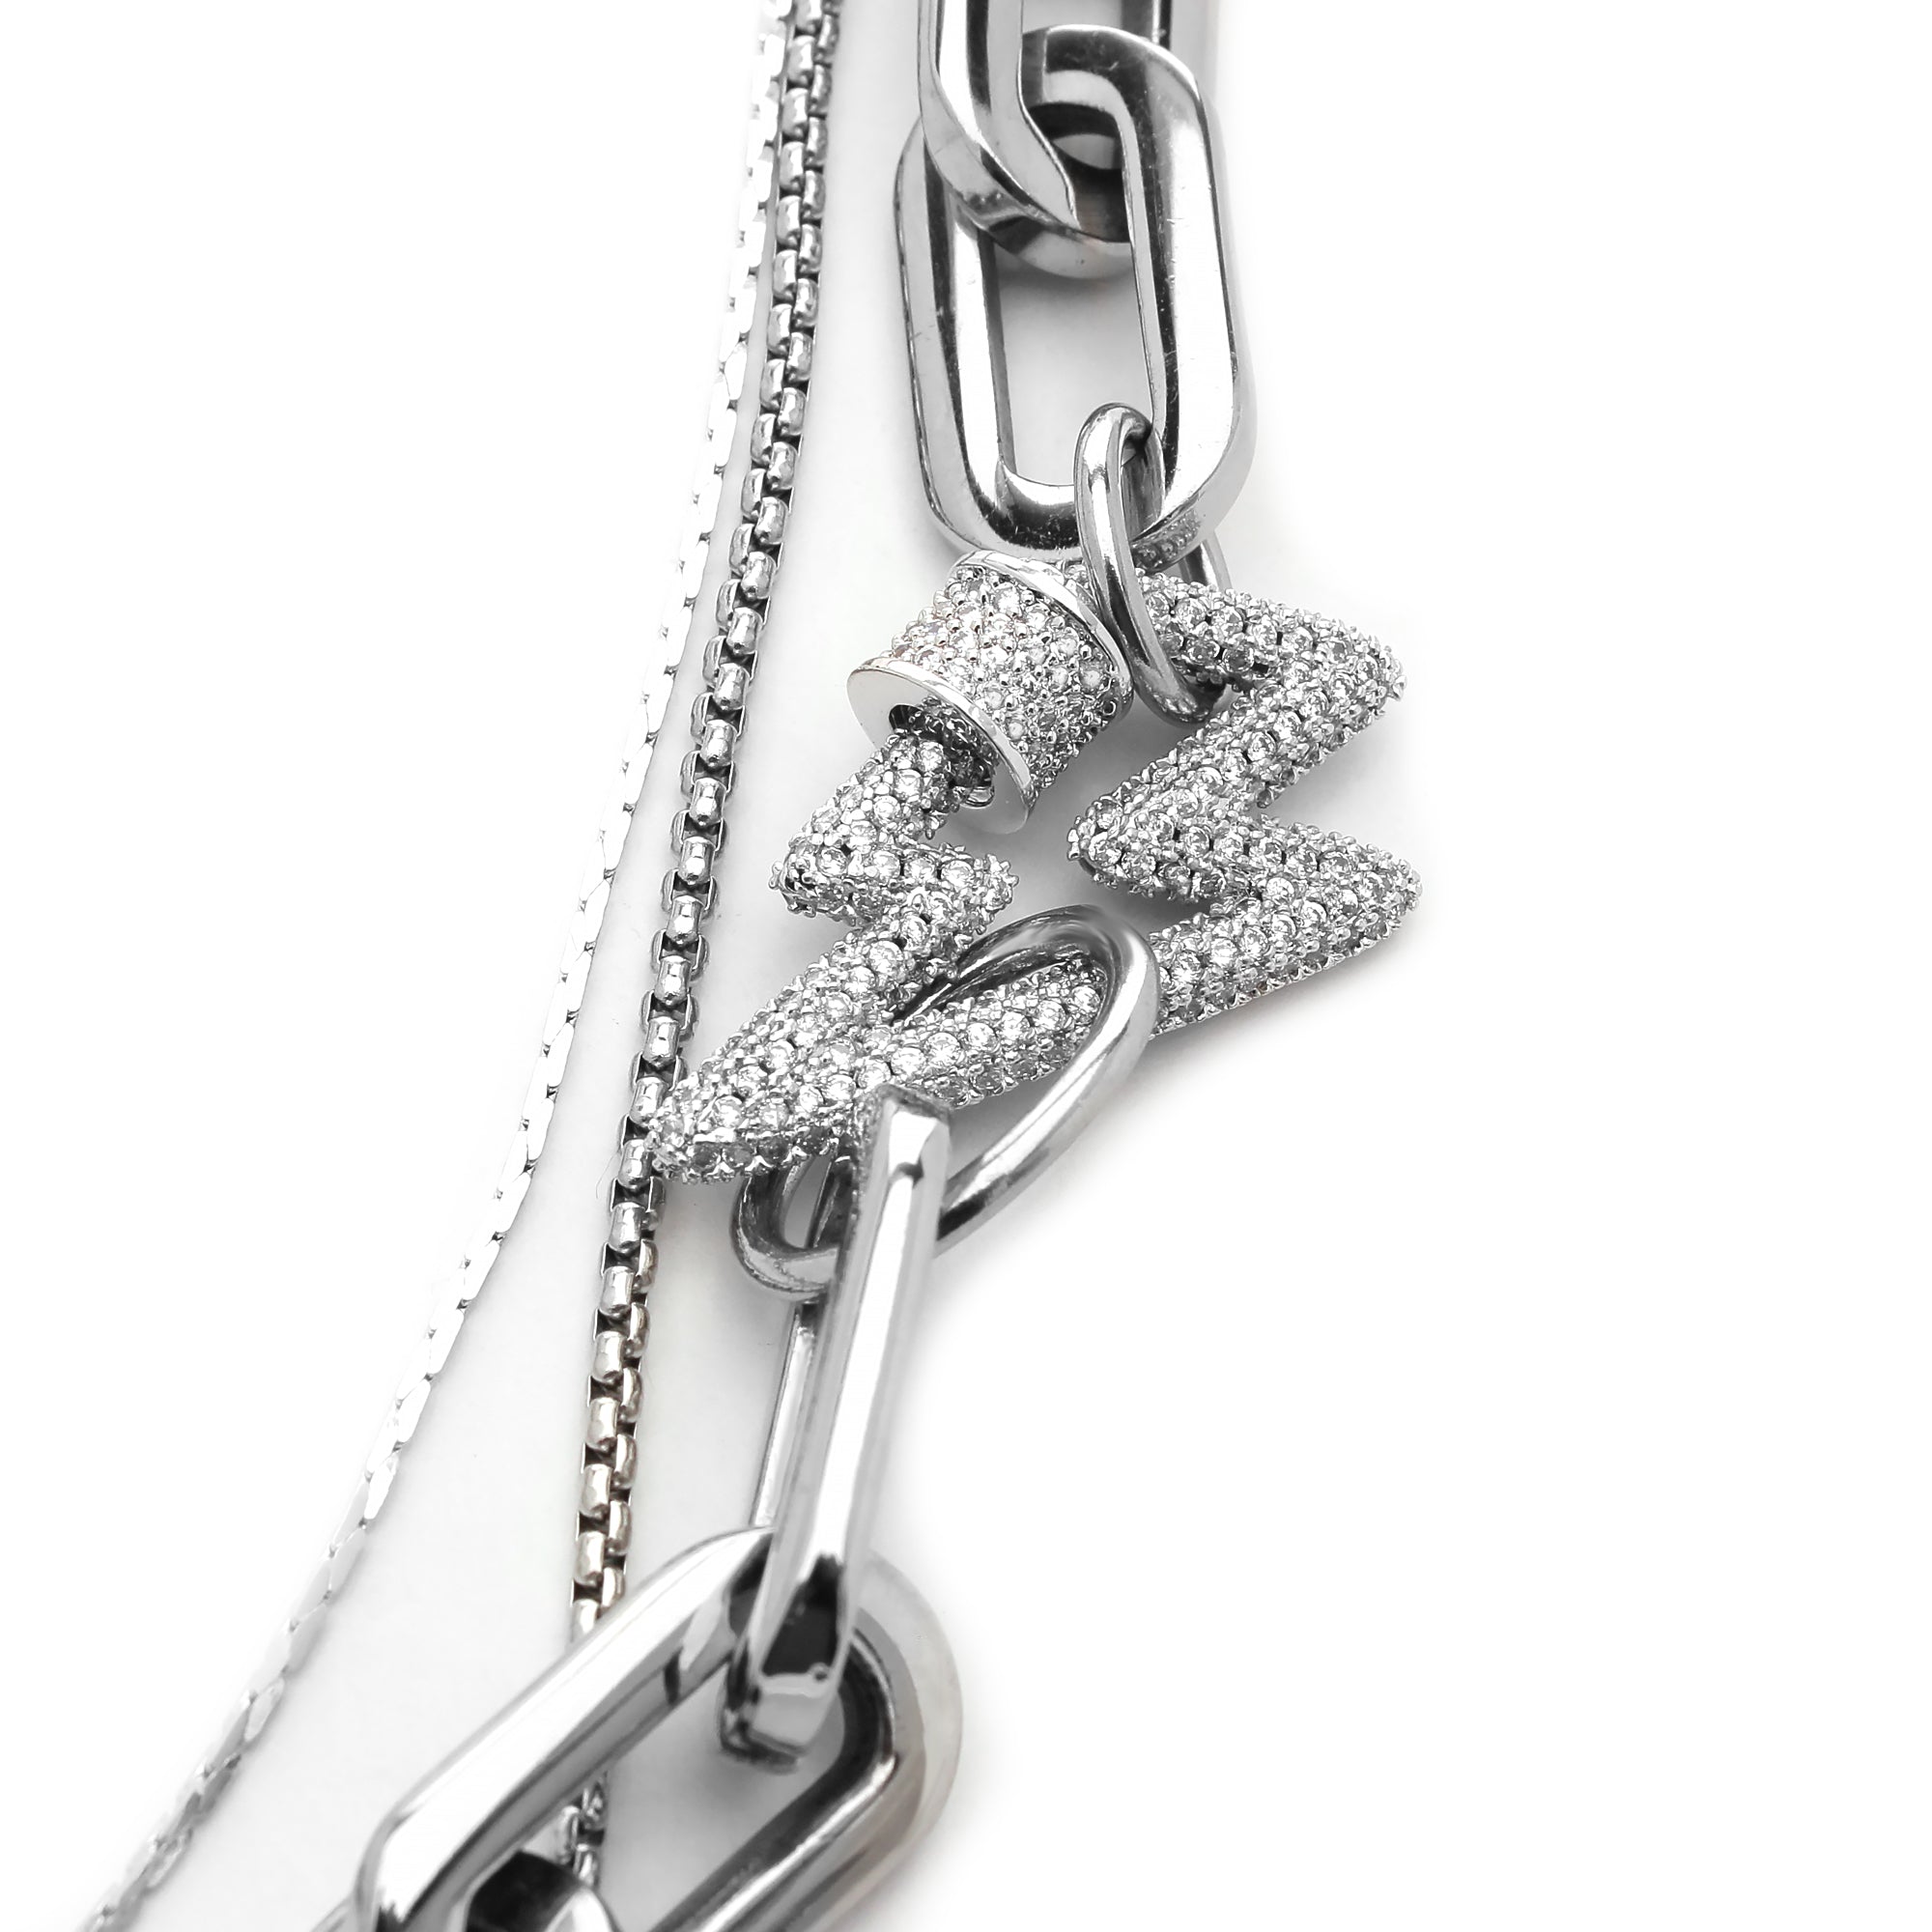 Louis Vuitton Mens Necklaces & Chokers 2023 Ss, Silver